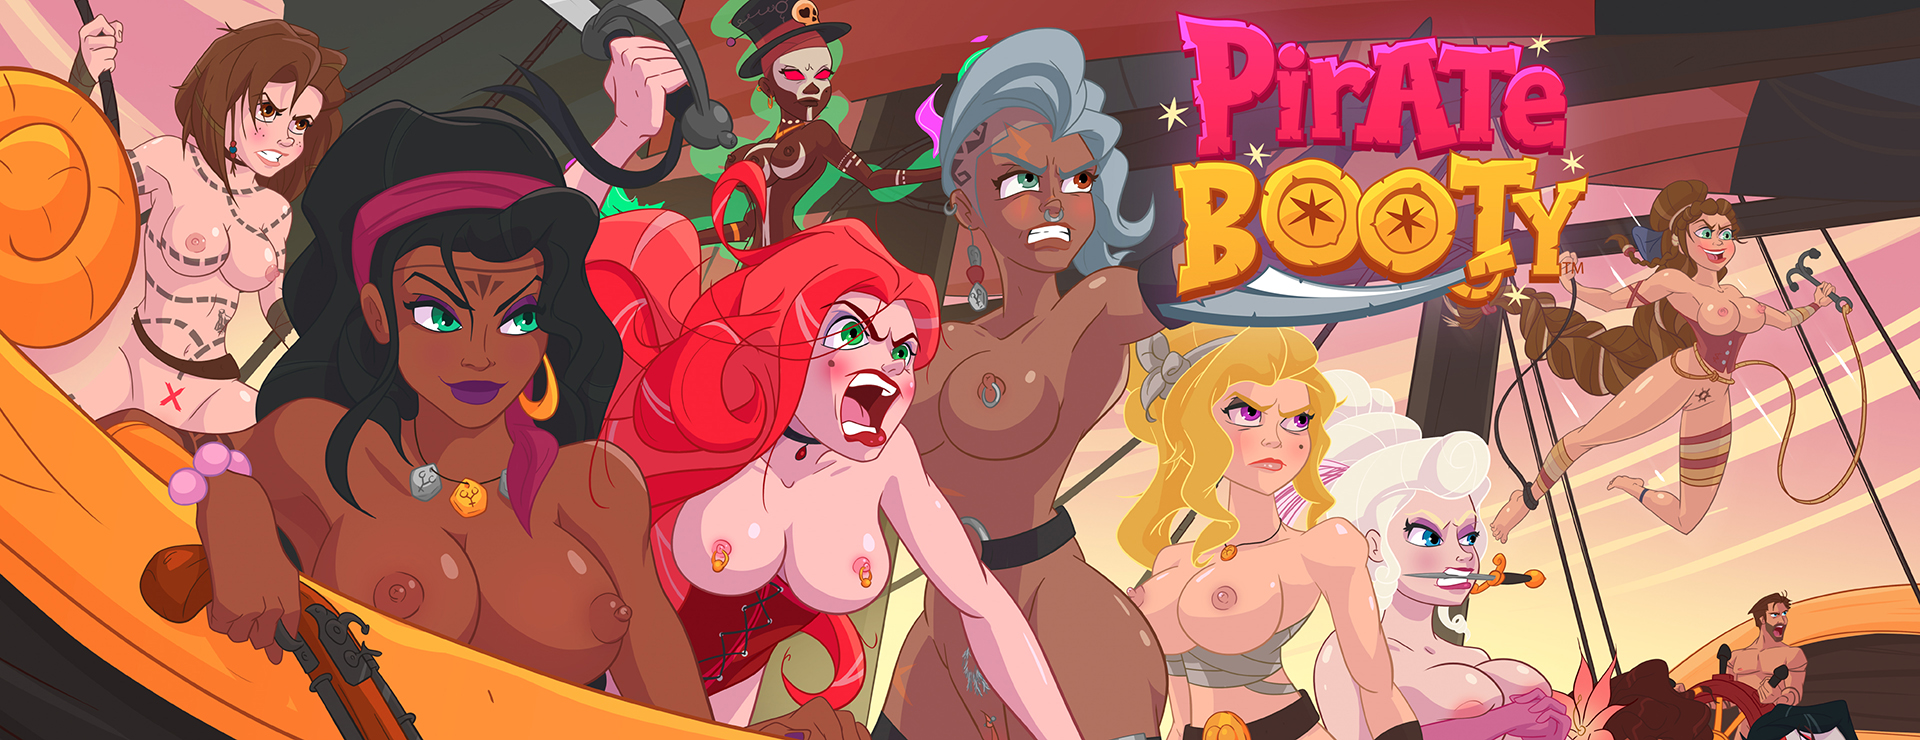 Pirate Booty - カジュアル ゲーム